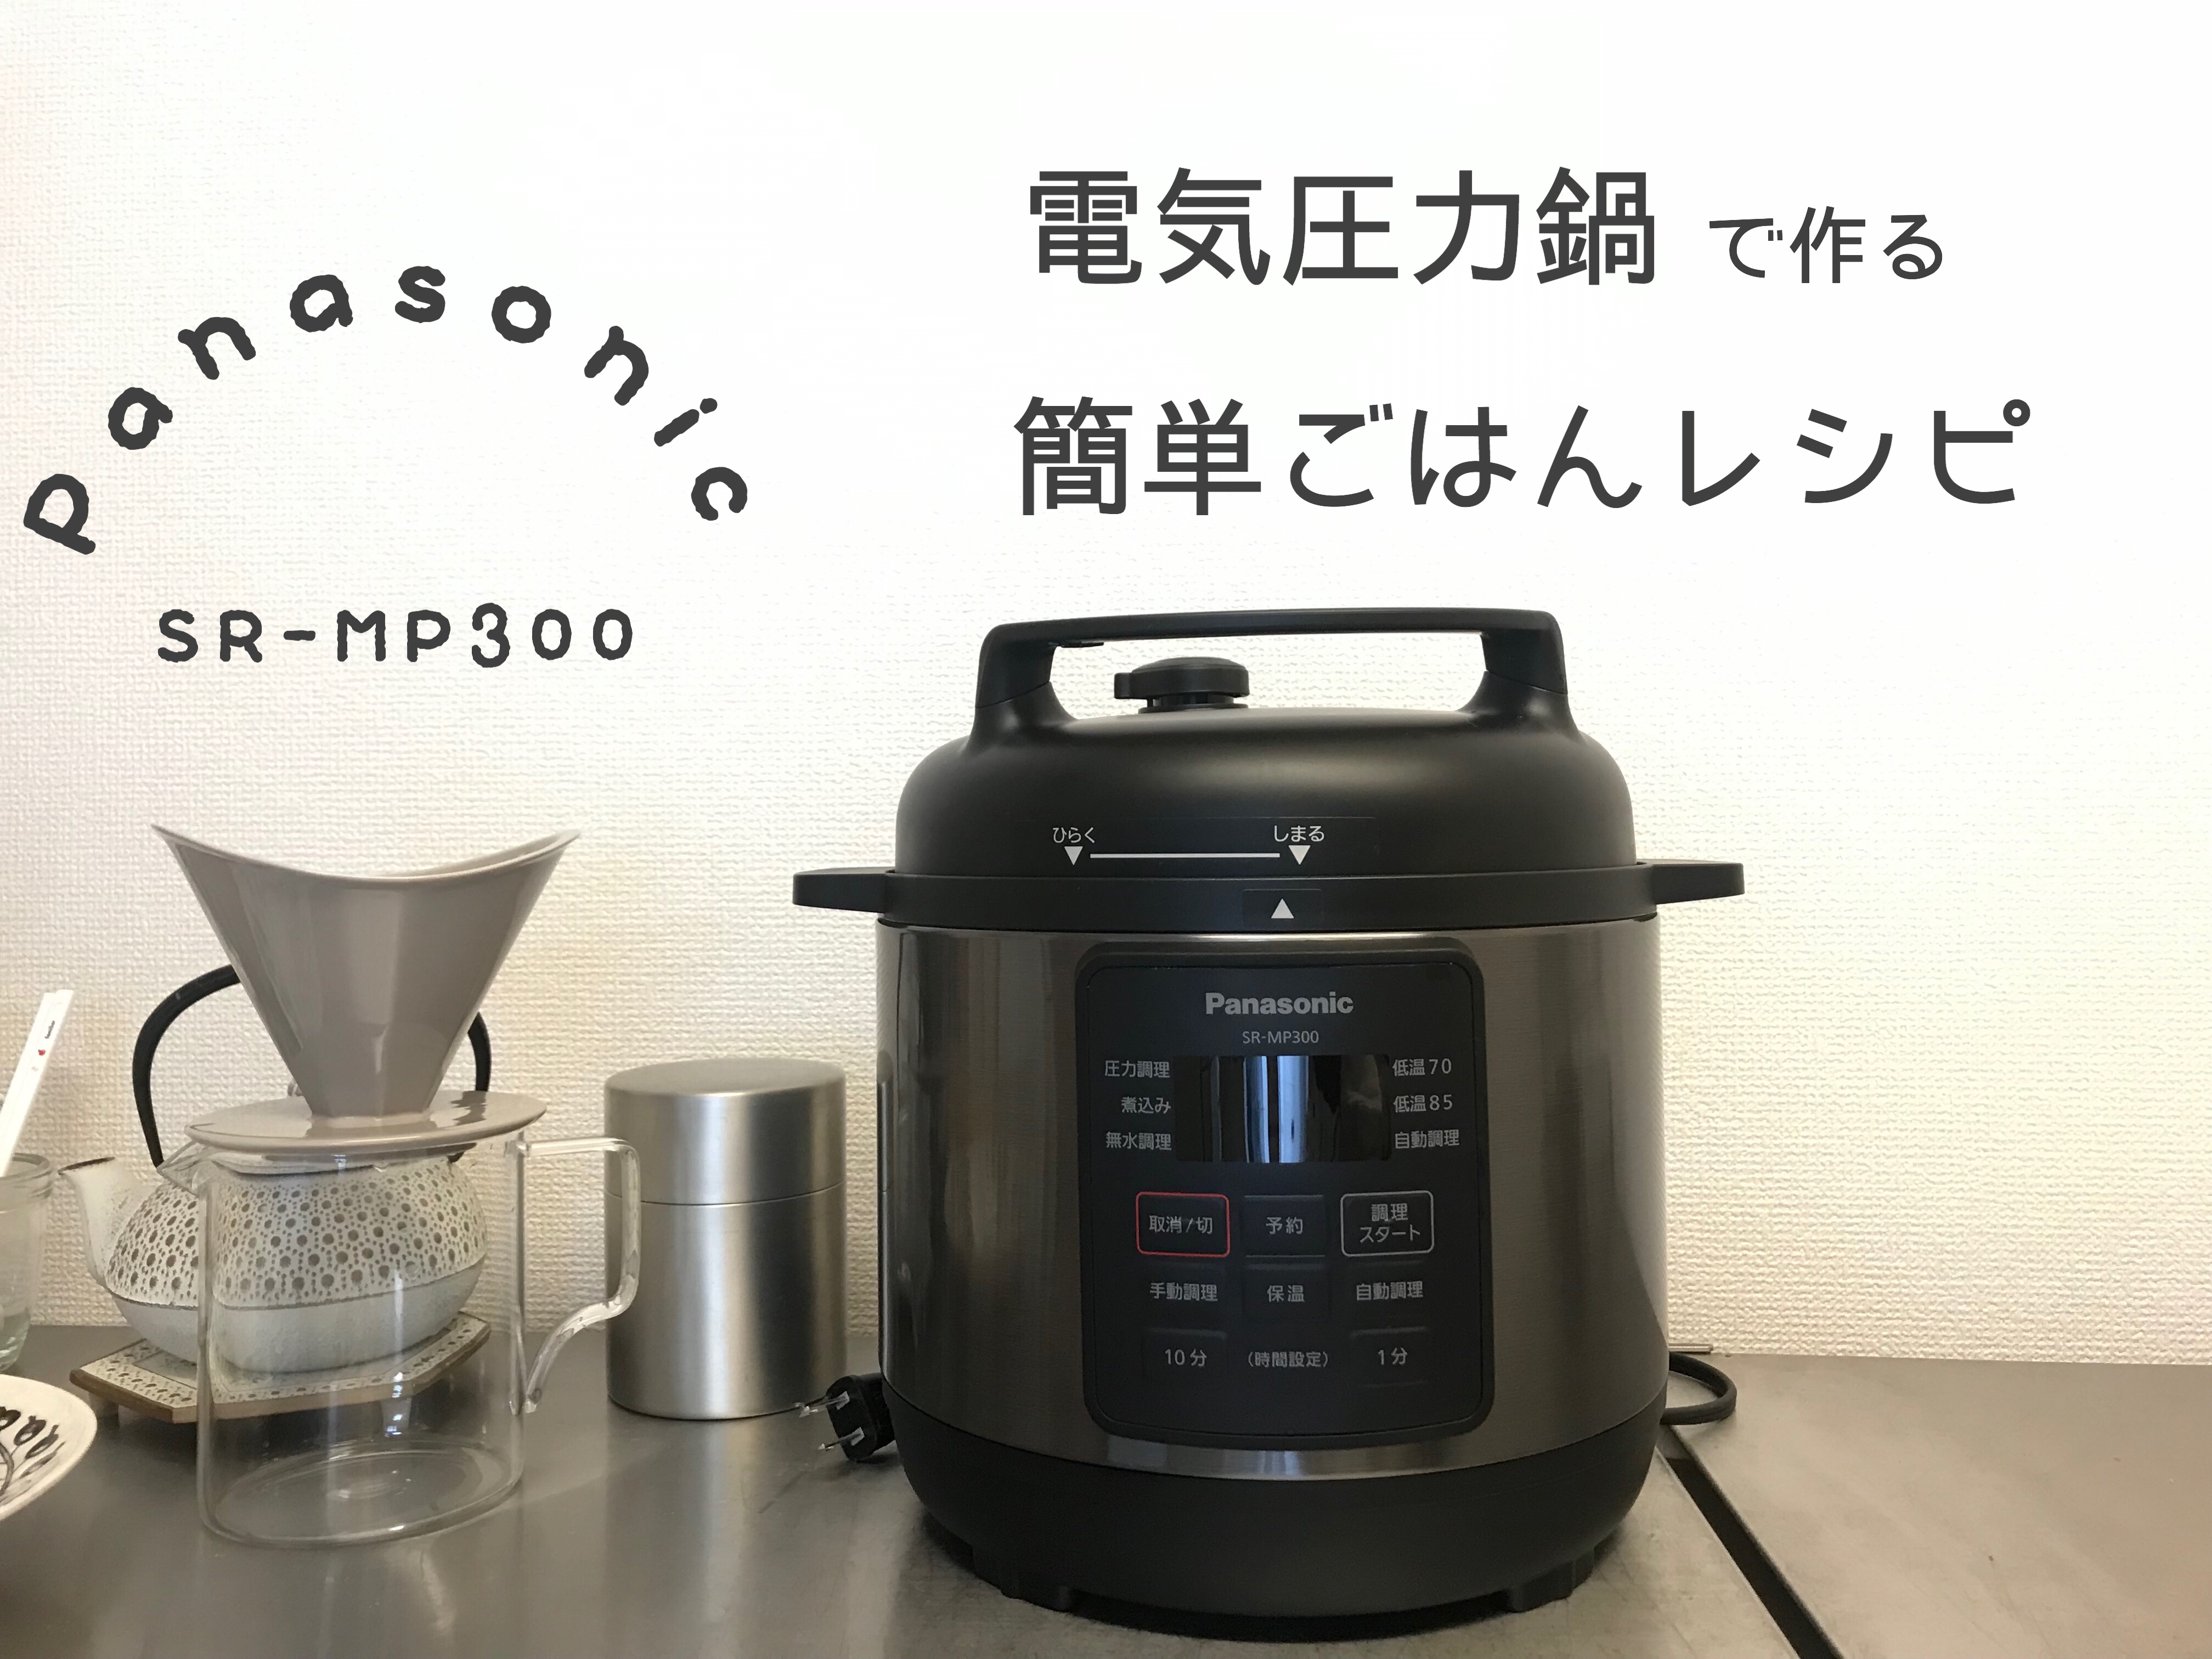 Panasonicの電気圧力鍋で作る簡単ごはんレシピ。←自分用メモ shirokuma